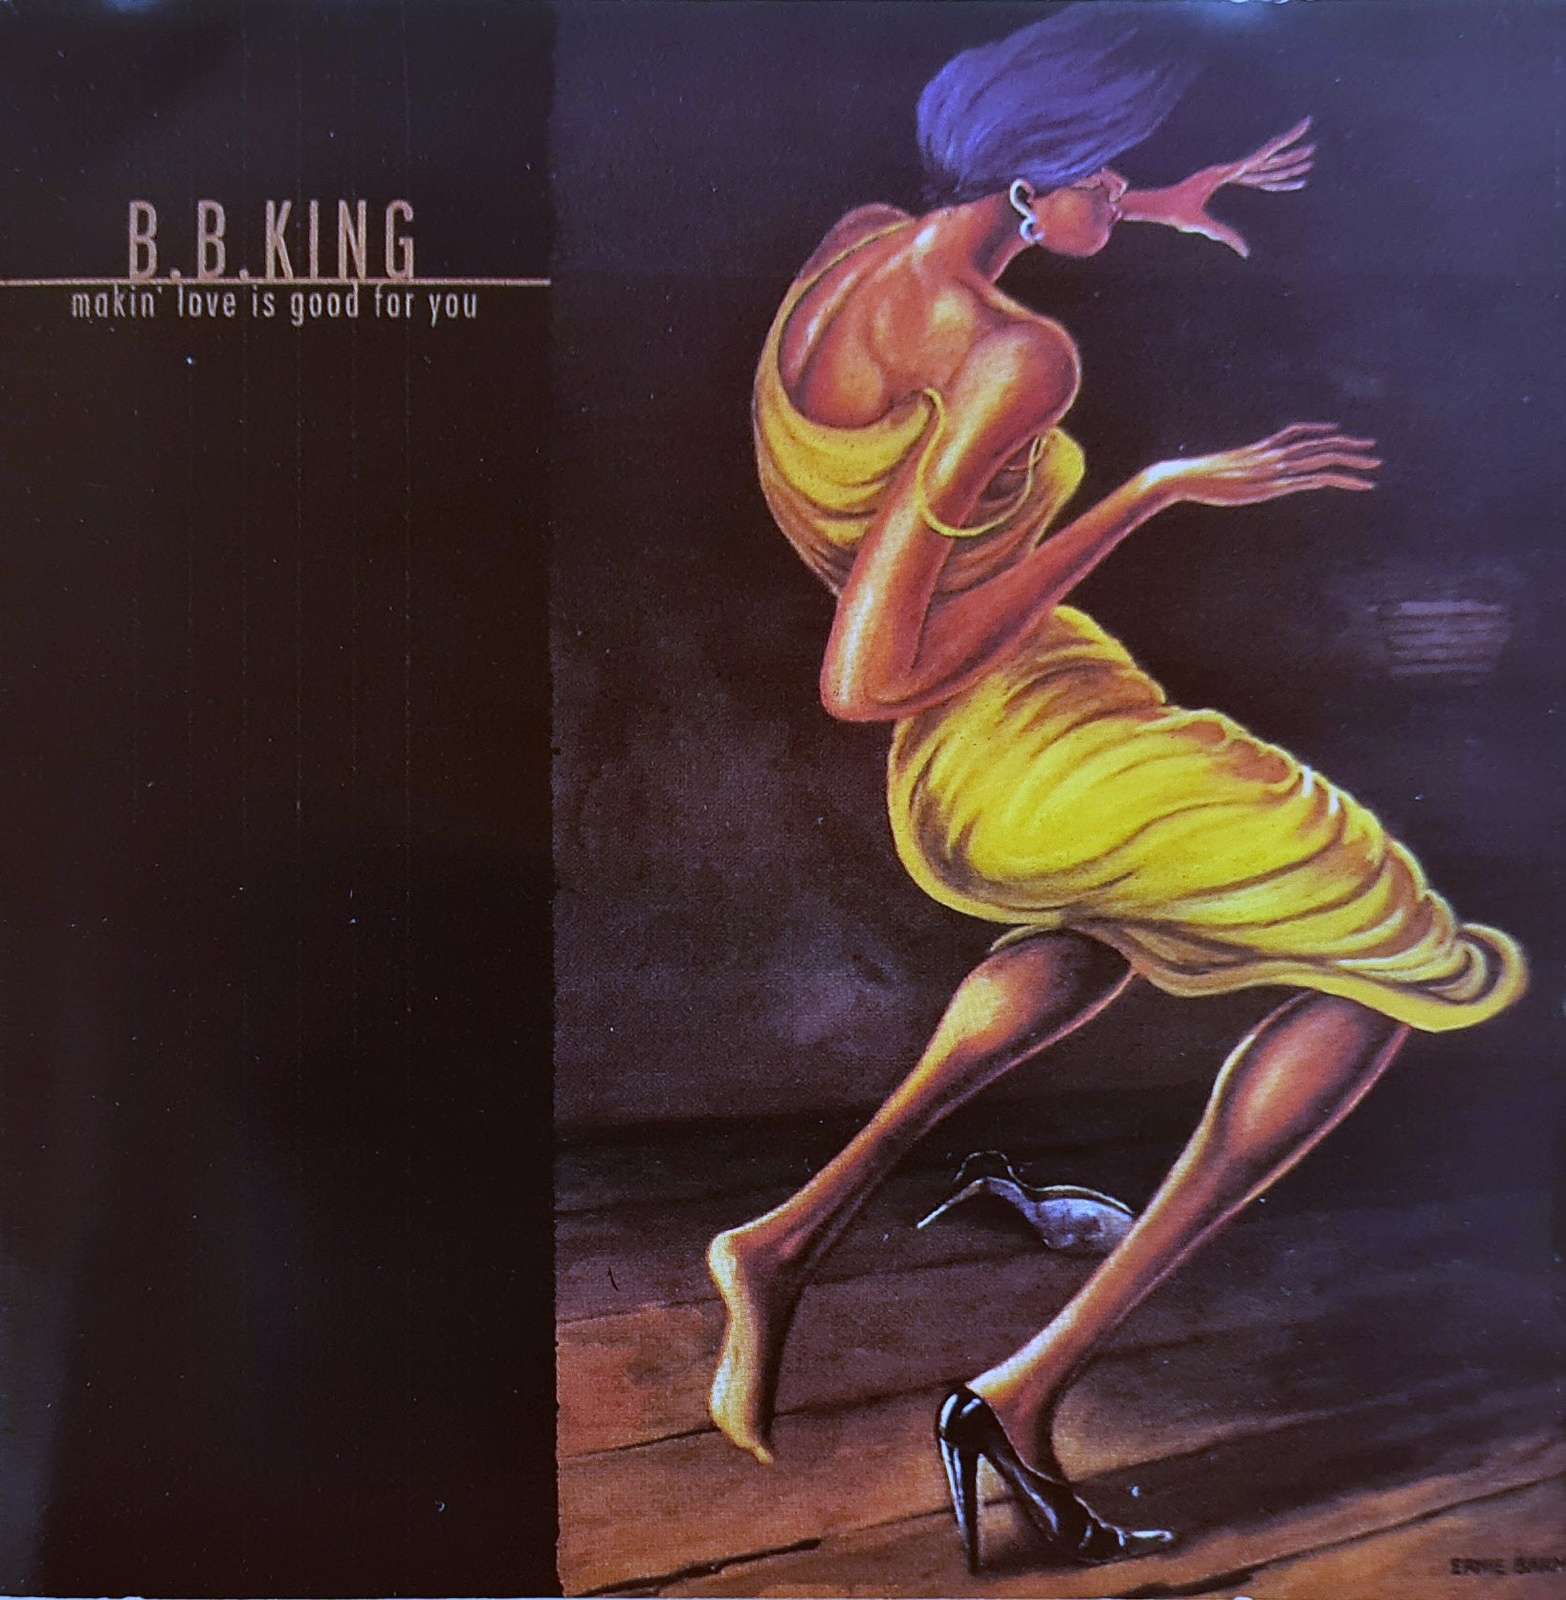 B.B. King - Makin' Love is Good for You (CD)